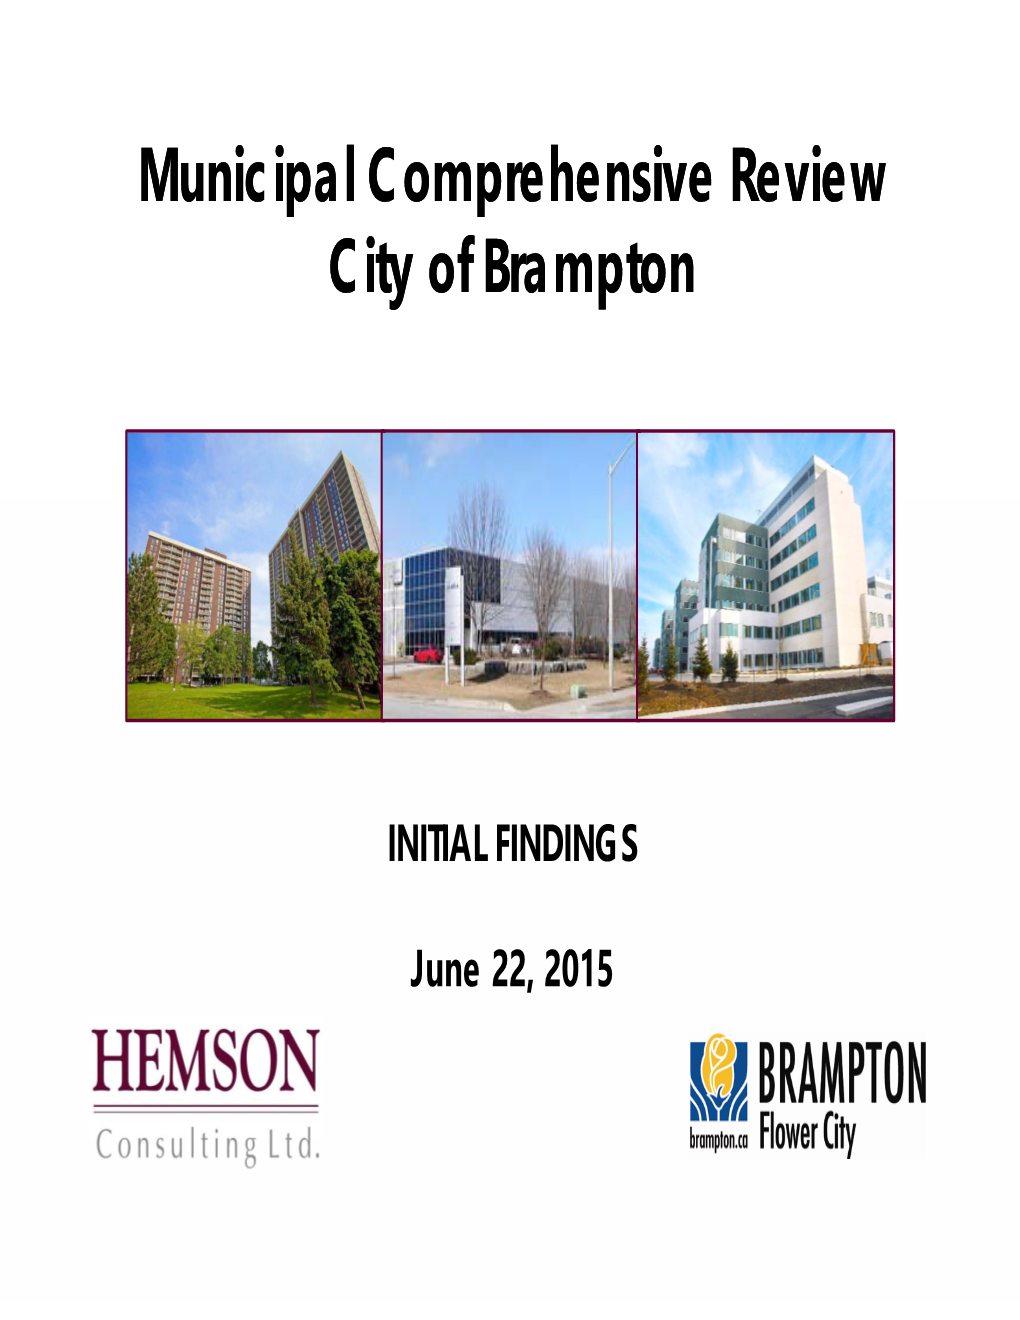 Municipal Comprehensive Review City of Brampton